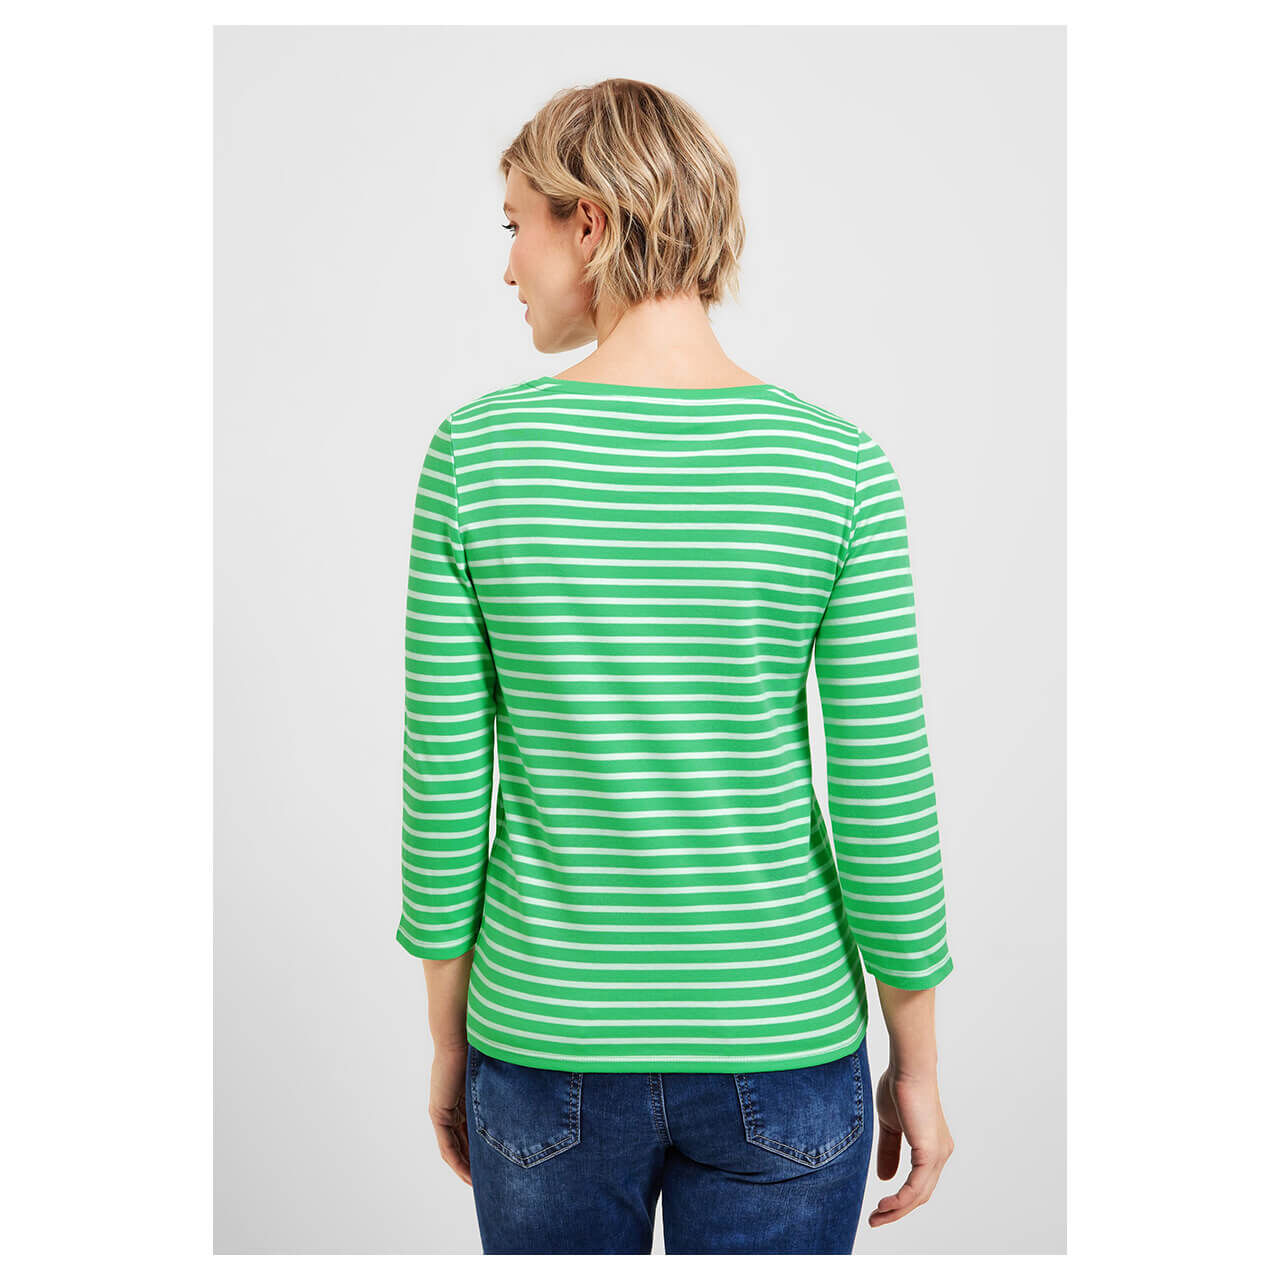 Cecil Basic Boatneck 3/4 Arm Shirt smash green stripes